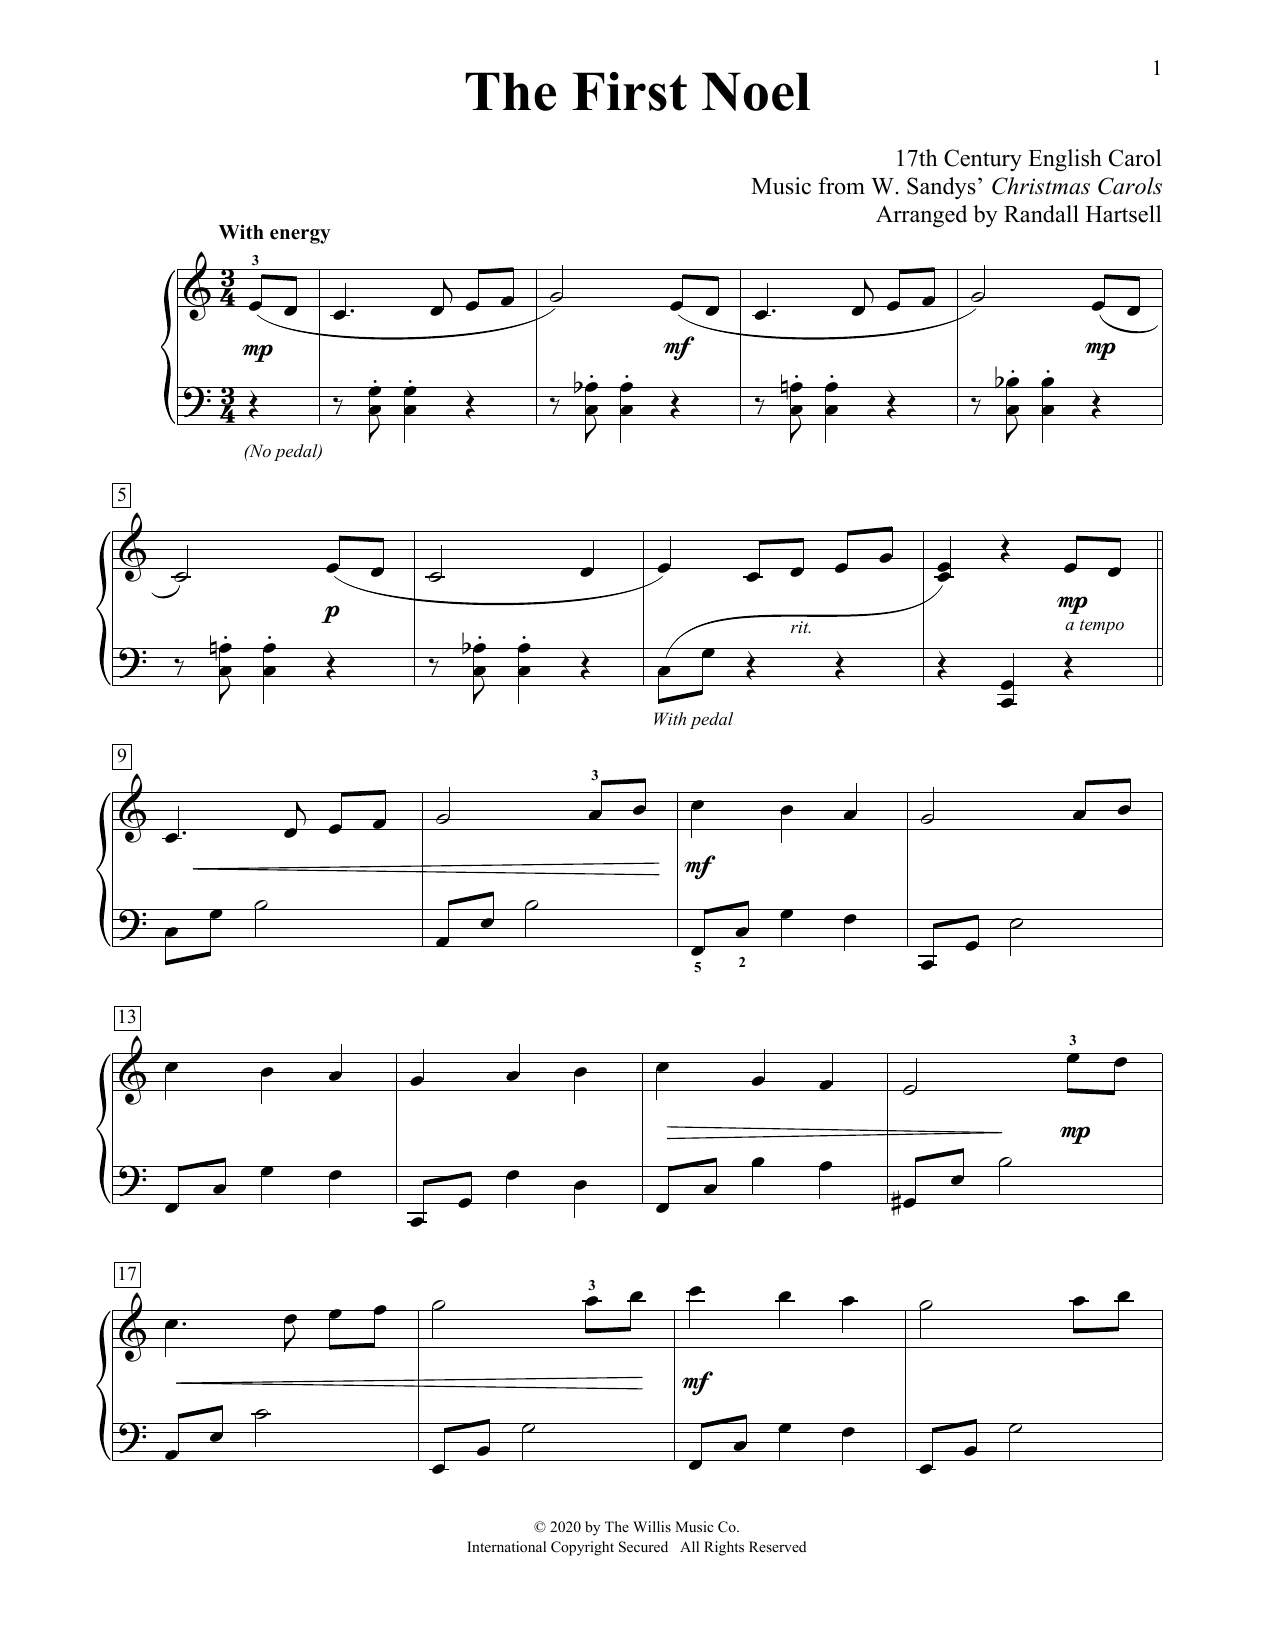 Download 17th Century English Carol The First Noel (arr. Randall Hartsell) Sheet Music